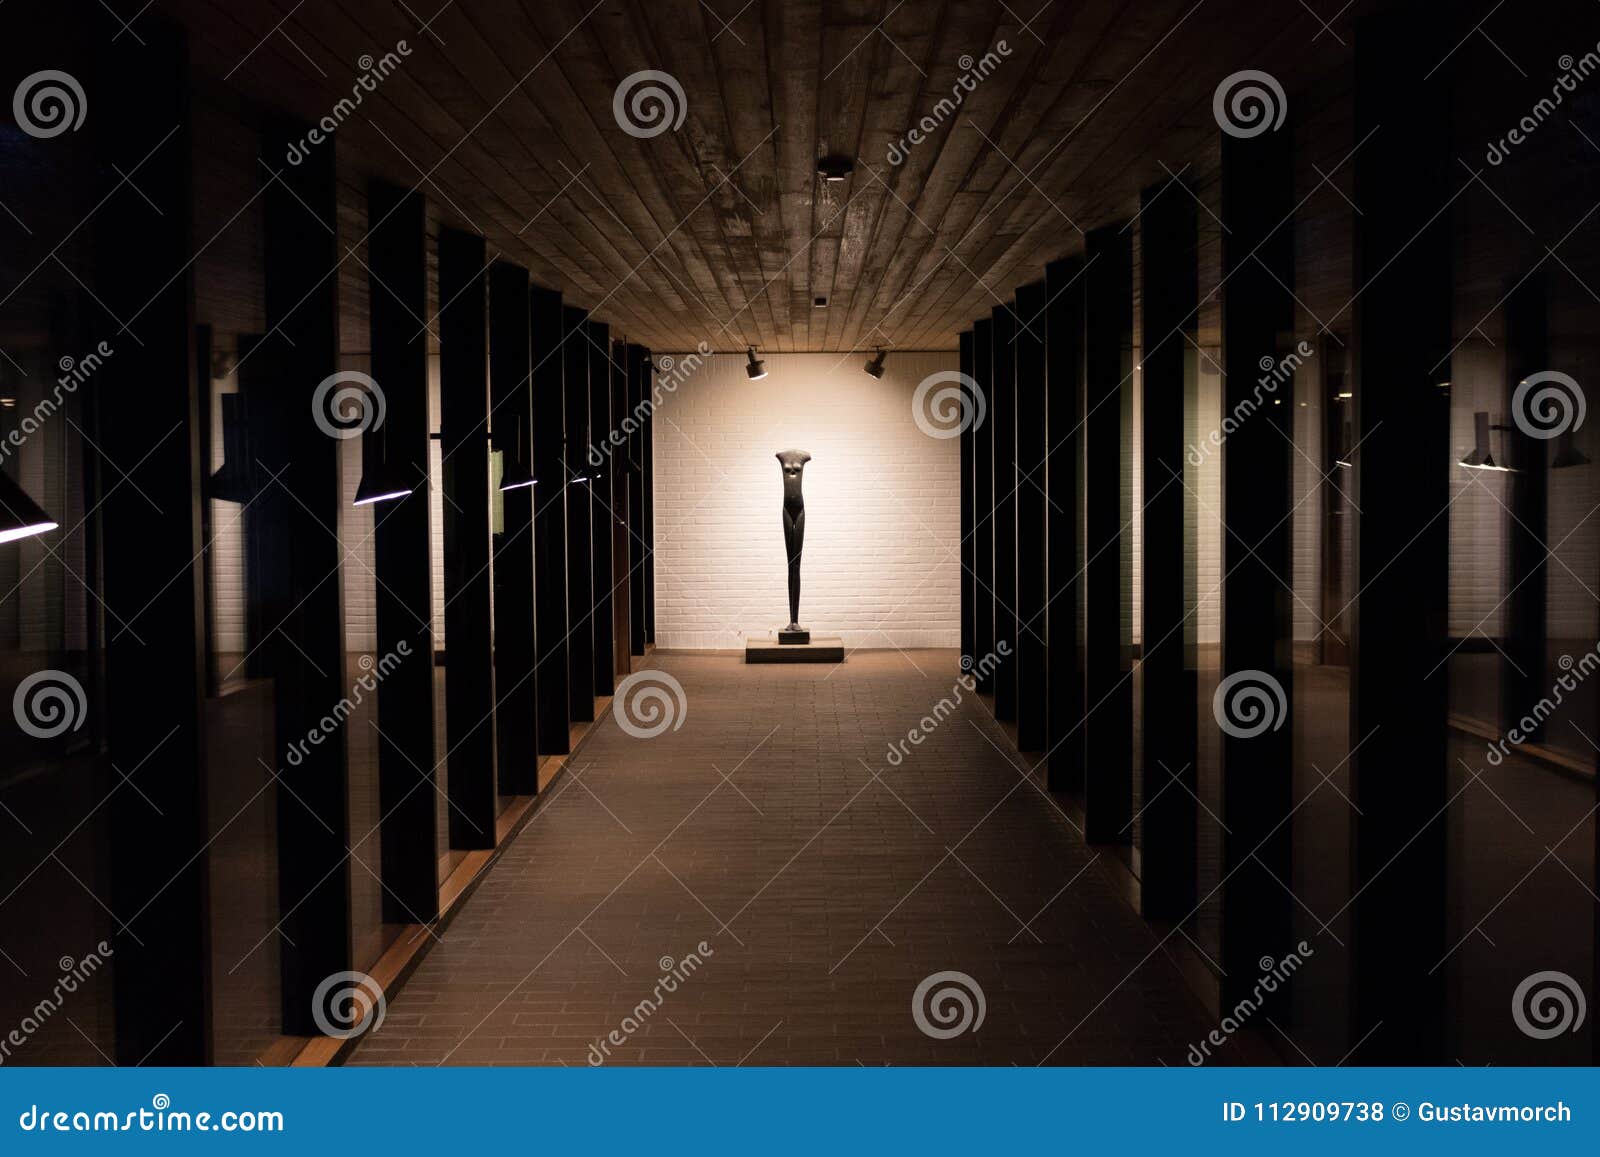 Louisiana Museum of Modern Art, Humlebæk, Denmark Stock Photo - Image of perspective, dark: 112909738